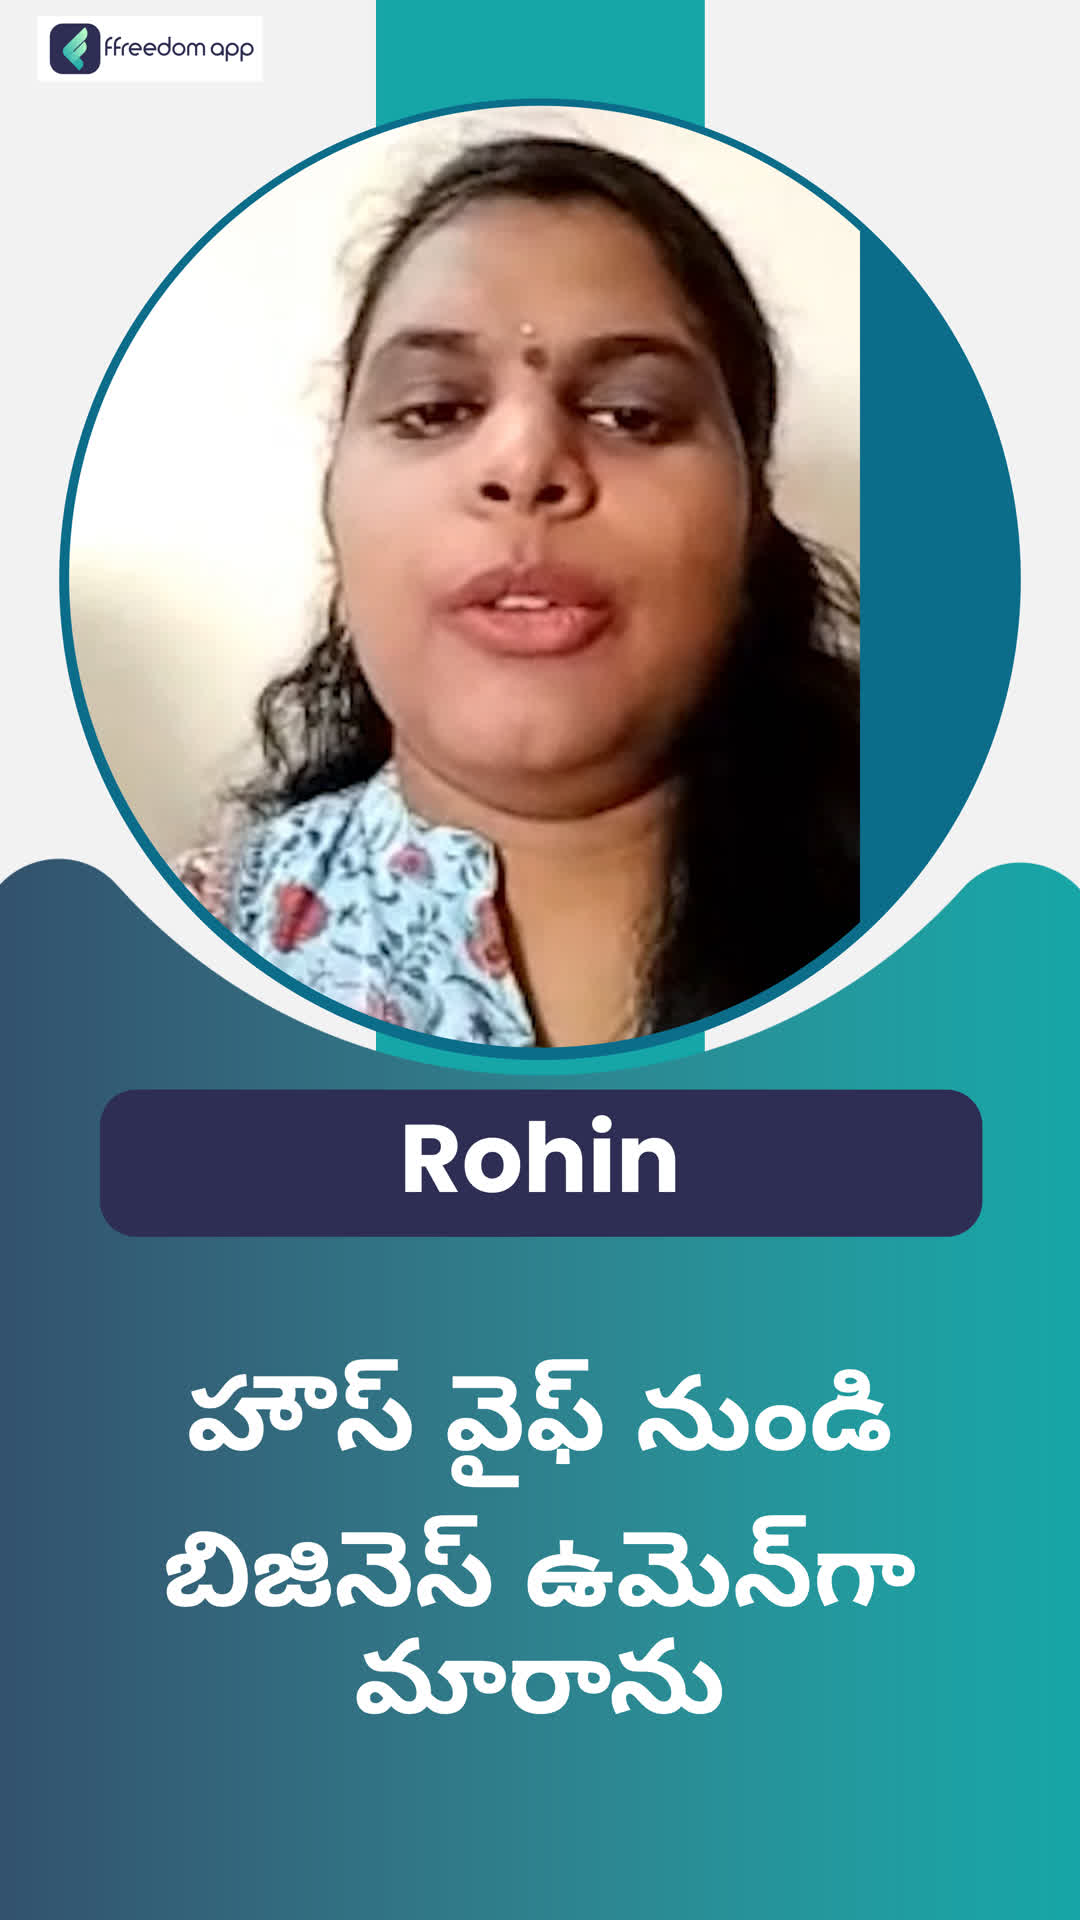 ROHINI 's Honest Review of ffreedom app - Hyderabad ,Telangana